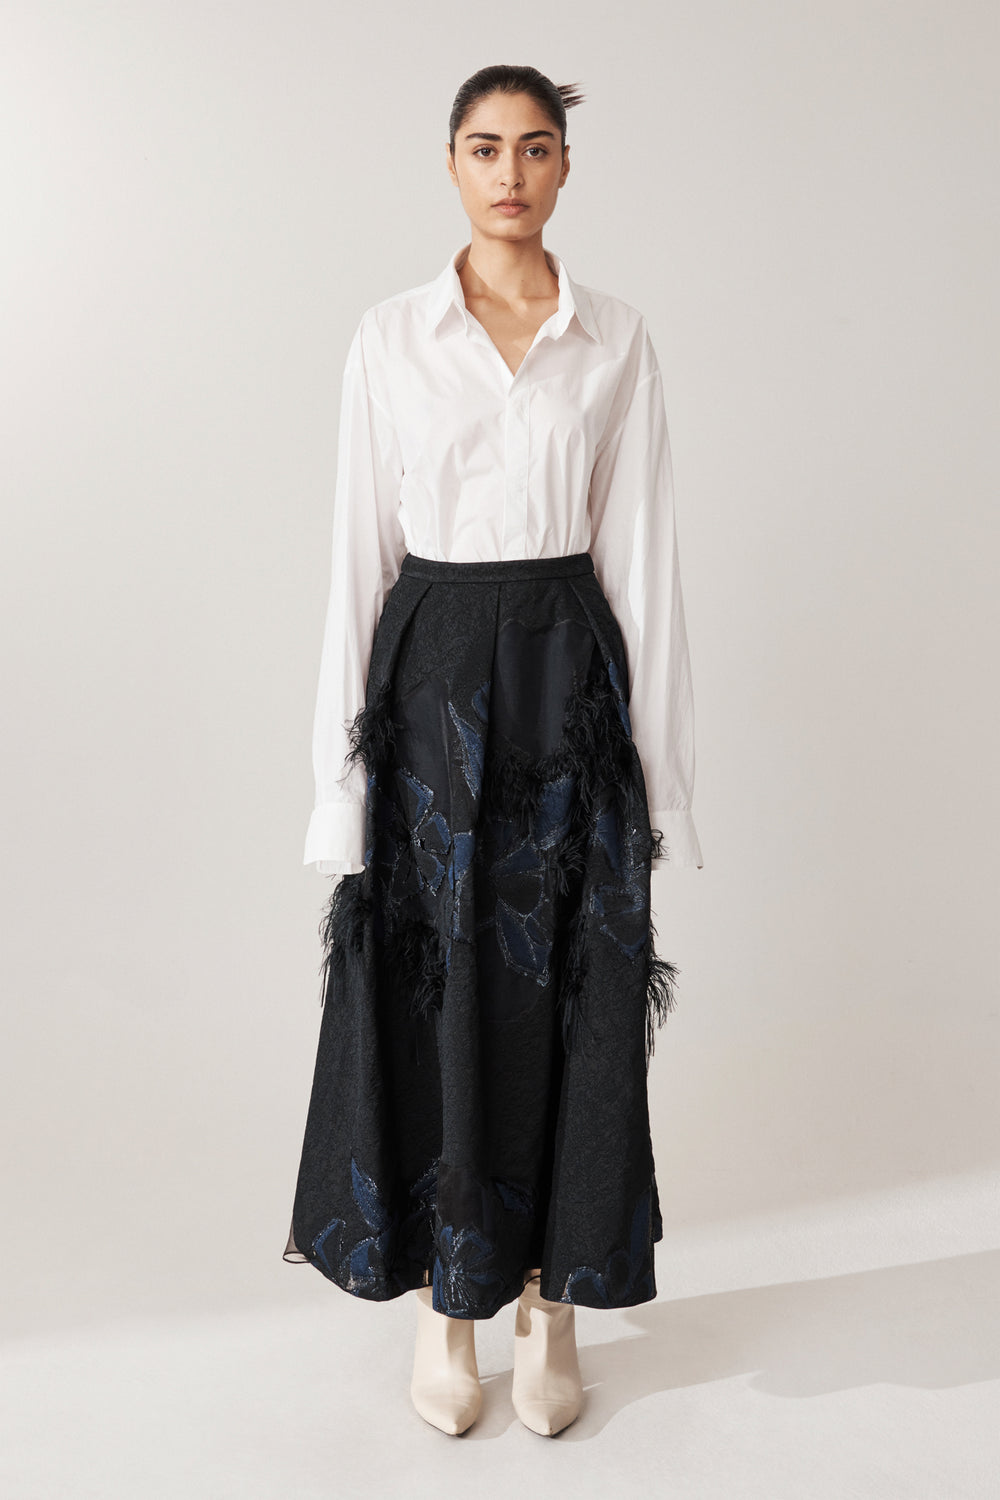 Tourmaline Skirt